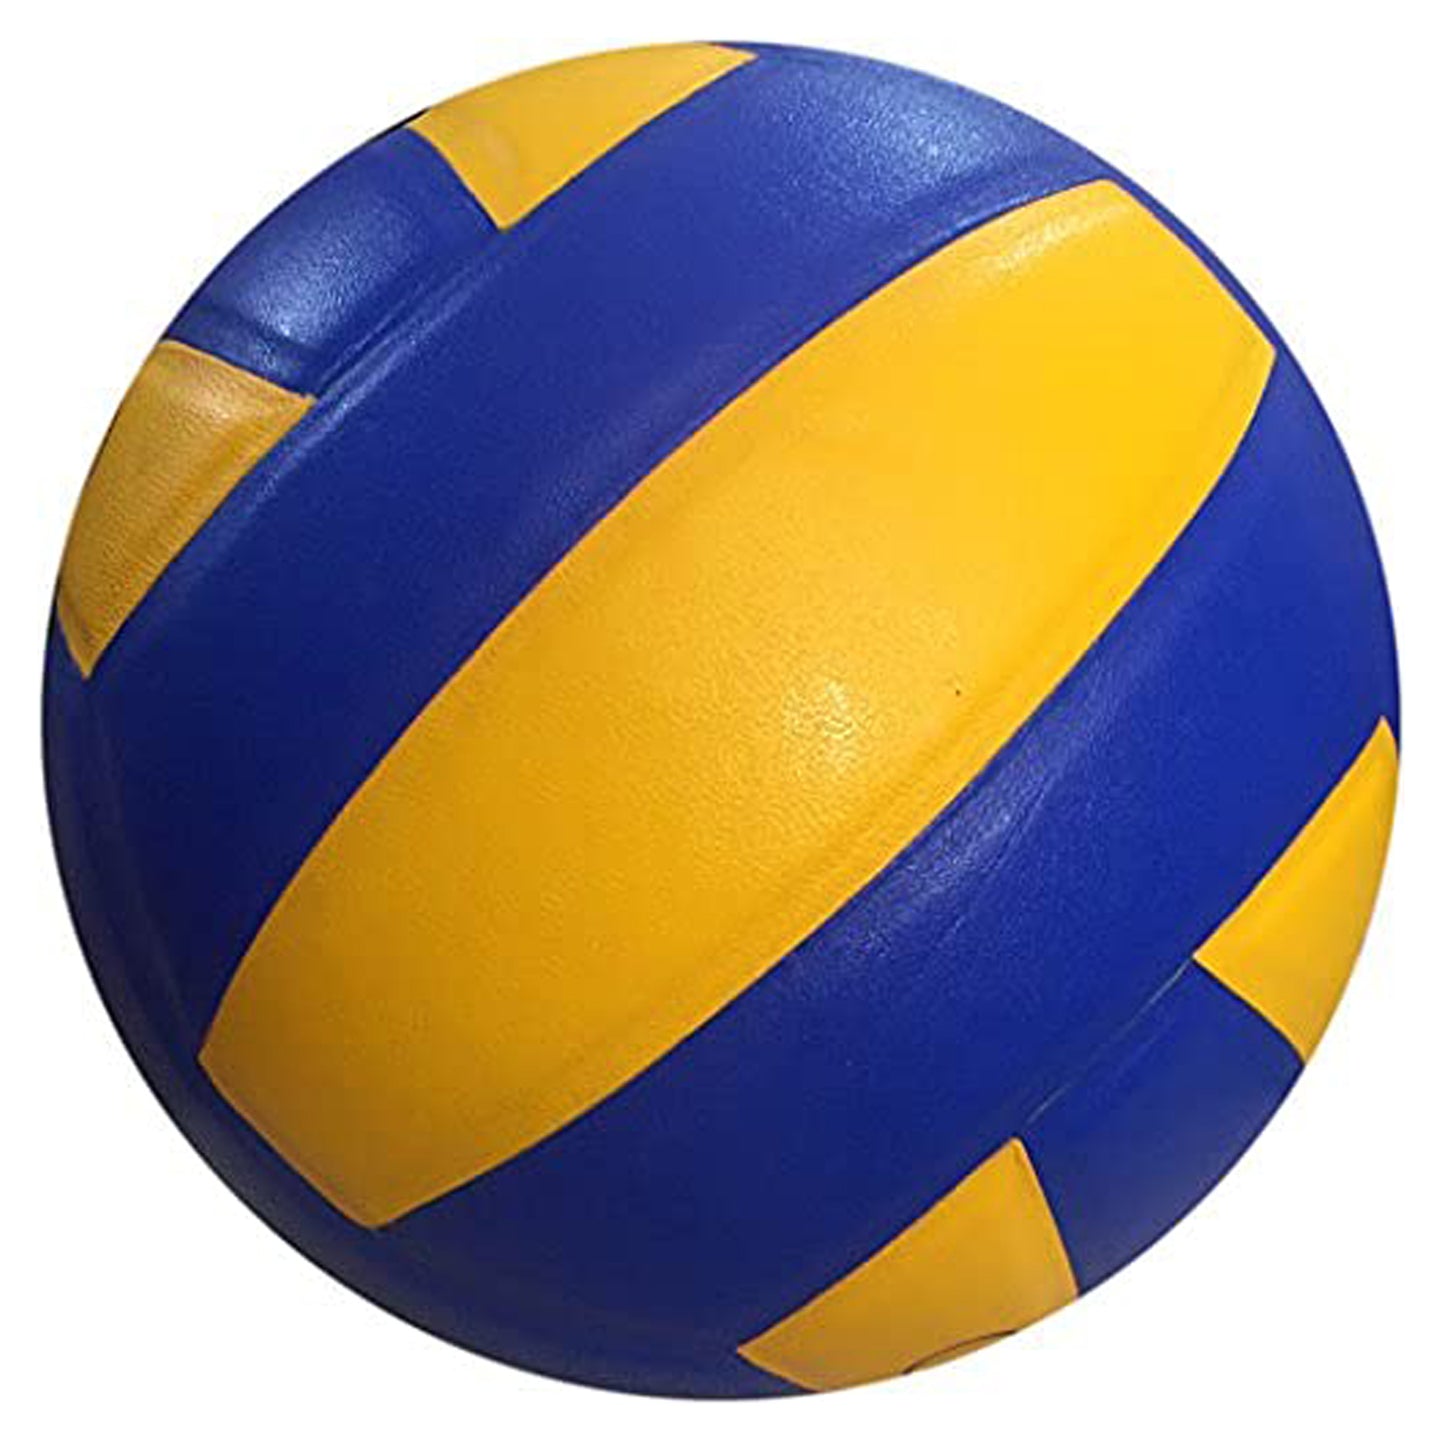 HRS VB-204 Super Volleyball, Blue/Yellow - Best Price online Prokicksports.com